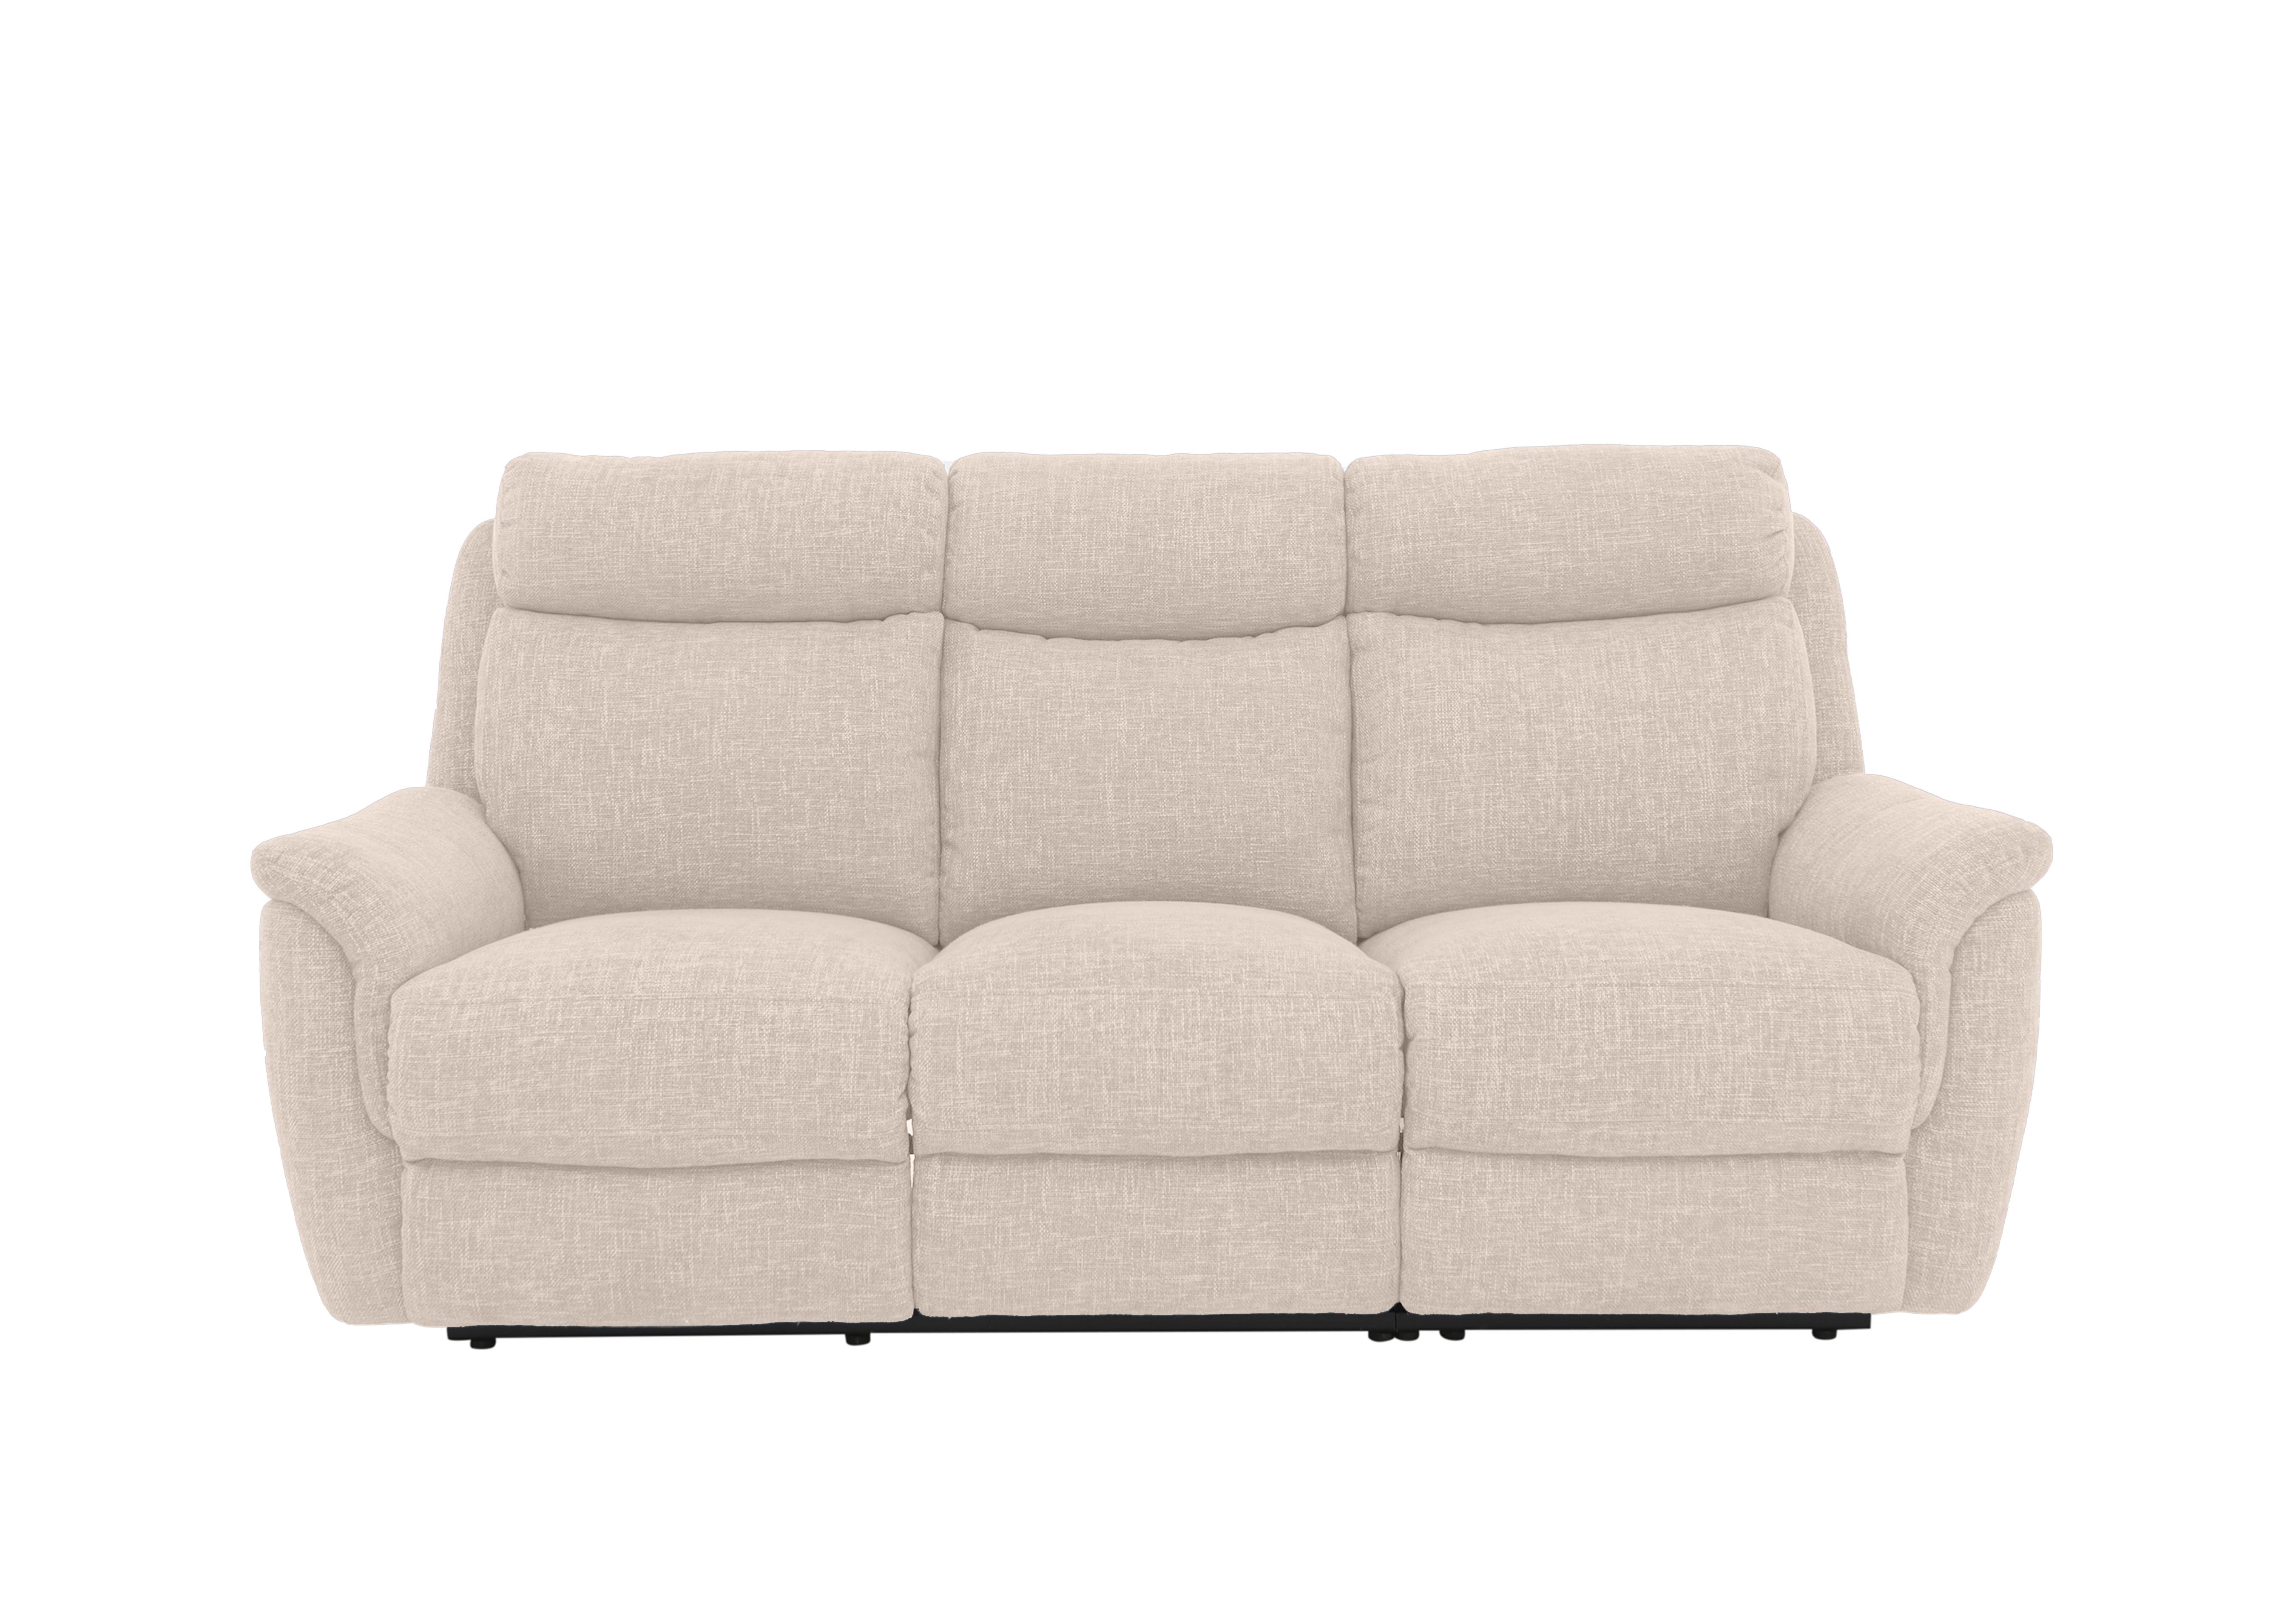 Orlando 3 Seater Fabric Sofa in Anivia Nature 13445 on Furniture Village